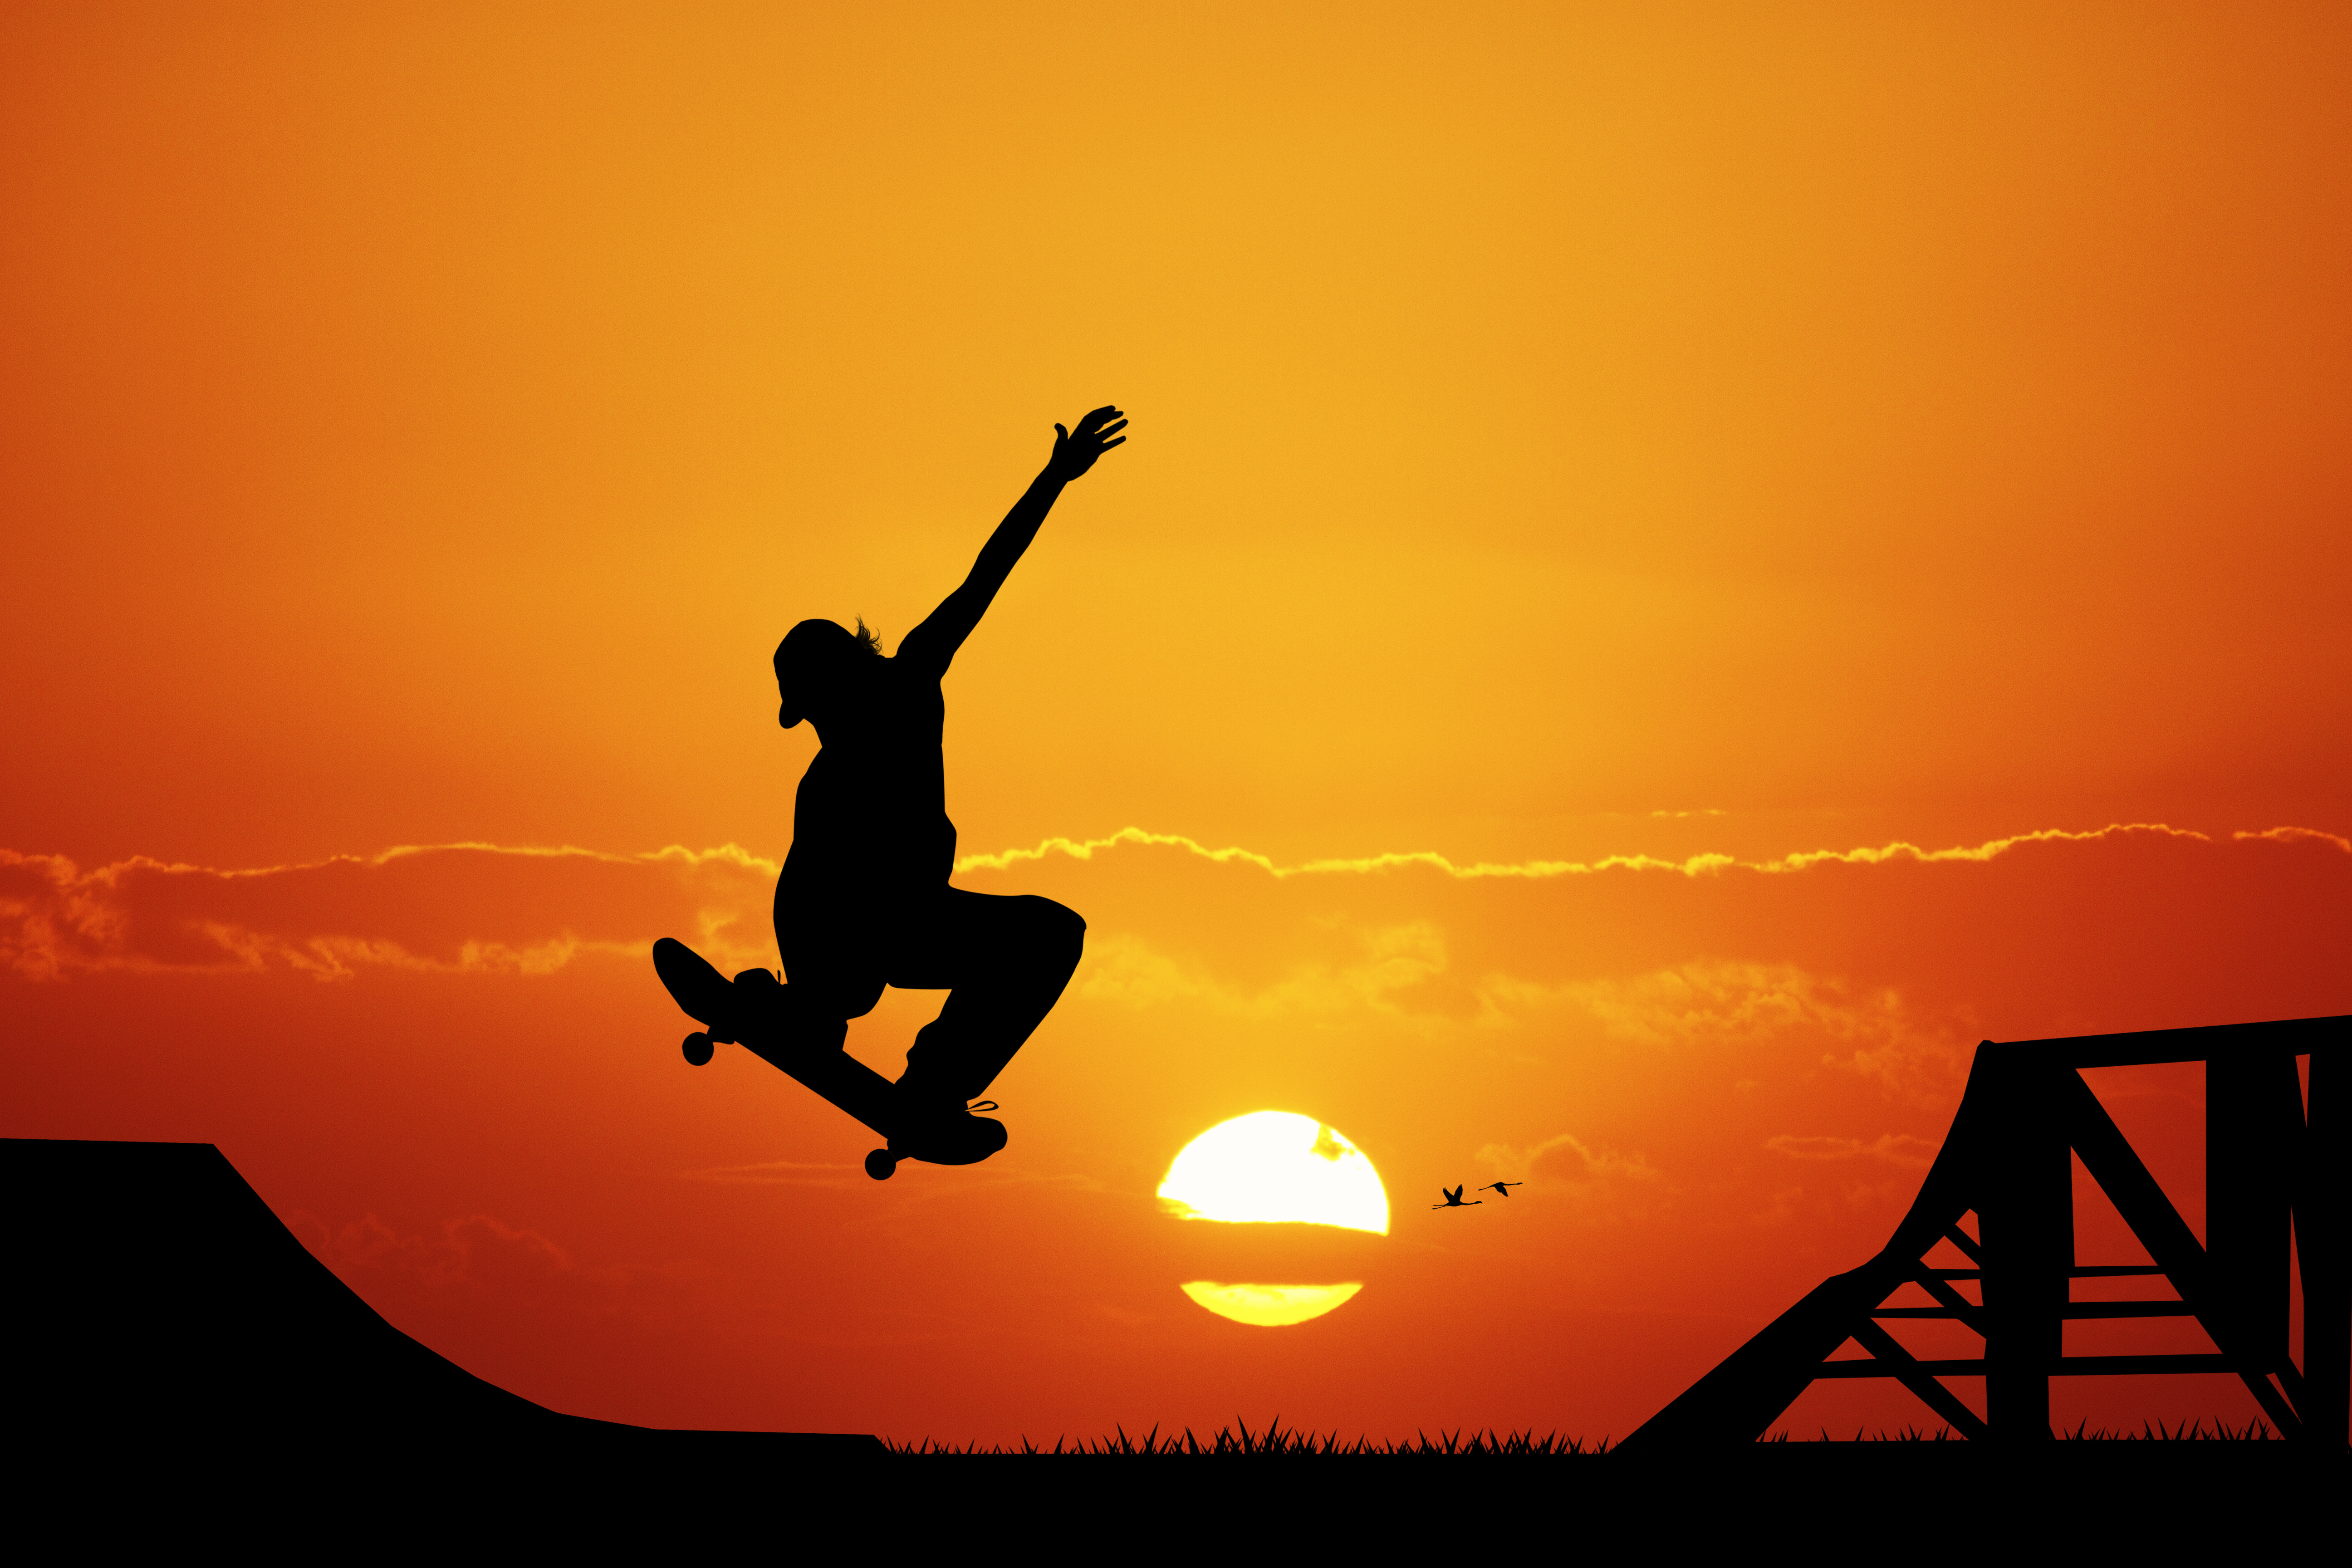 skate wallpaper,silhouette,sky,jumping,extreme sport,flip (acrobatic)